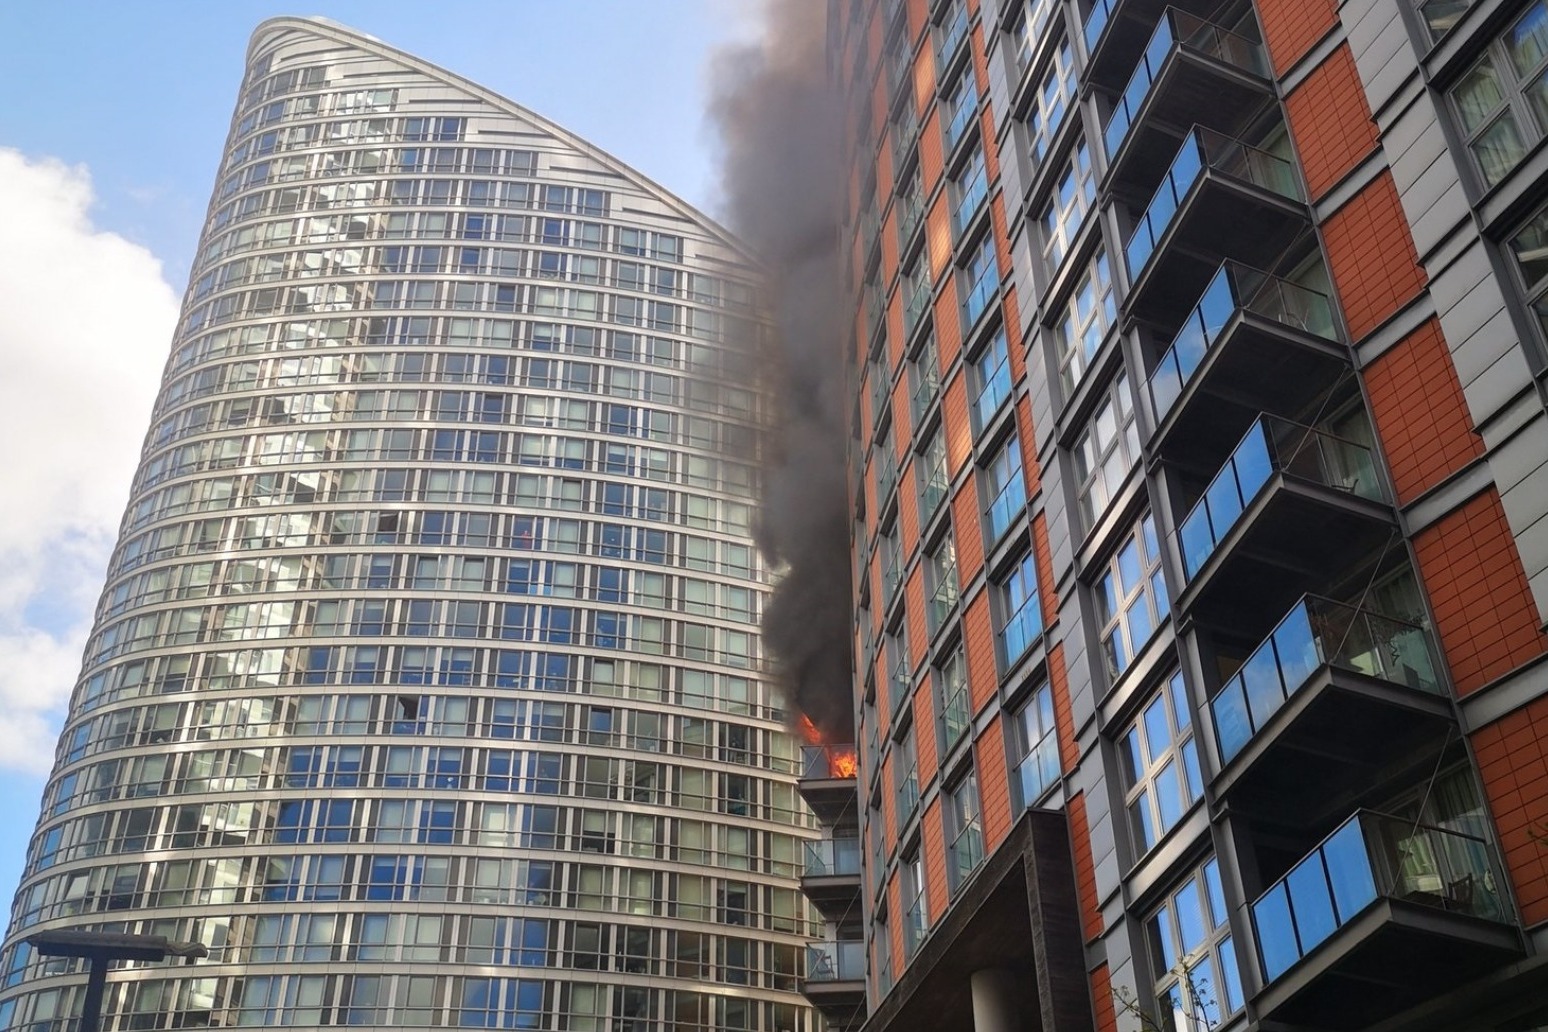 Blaze engulfs several floors of tower block near Canary Wharf 